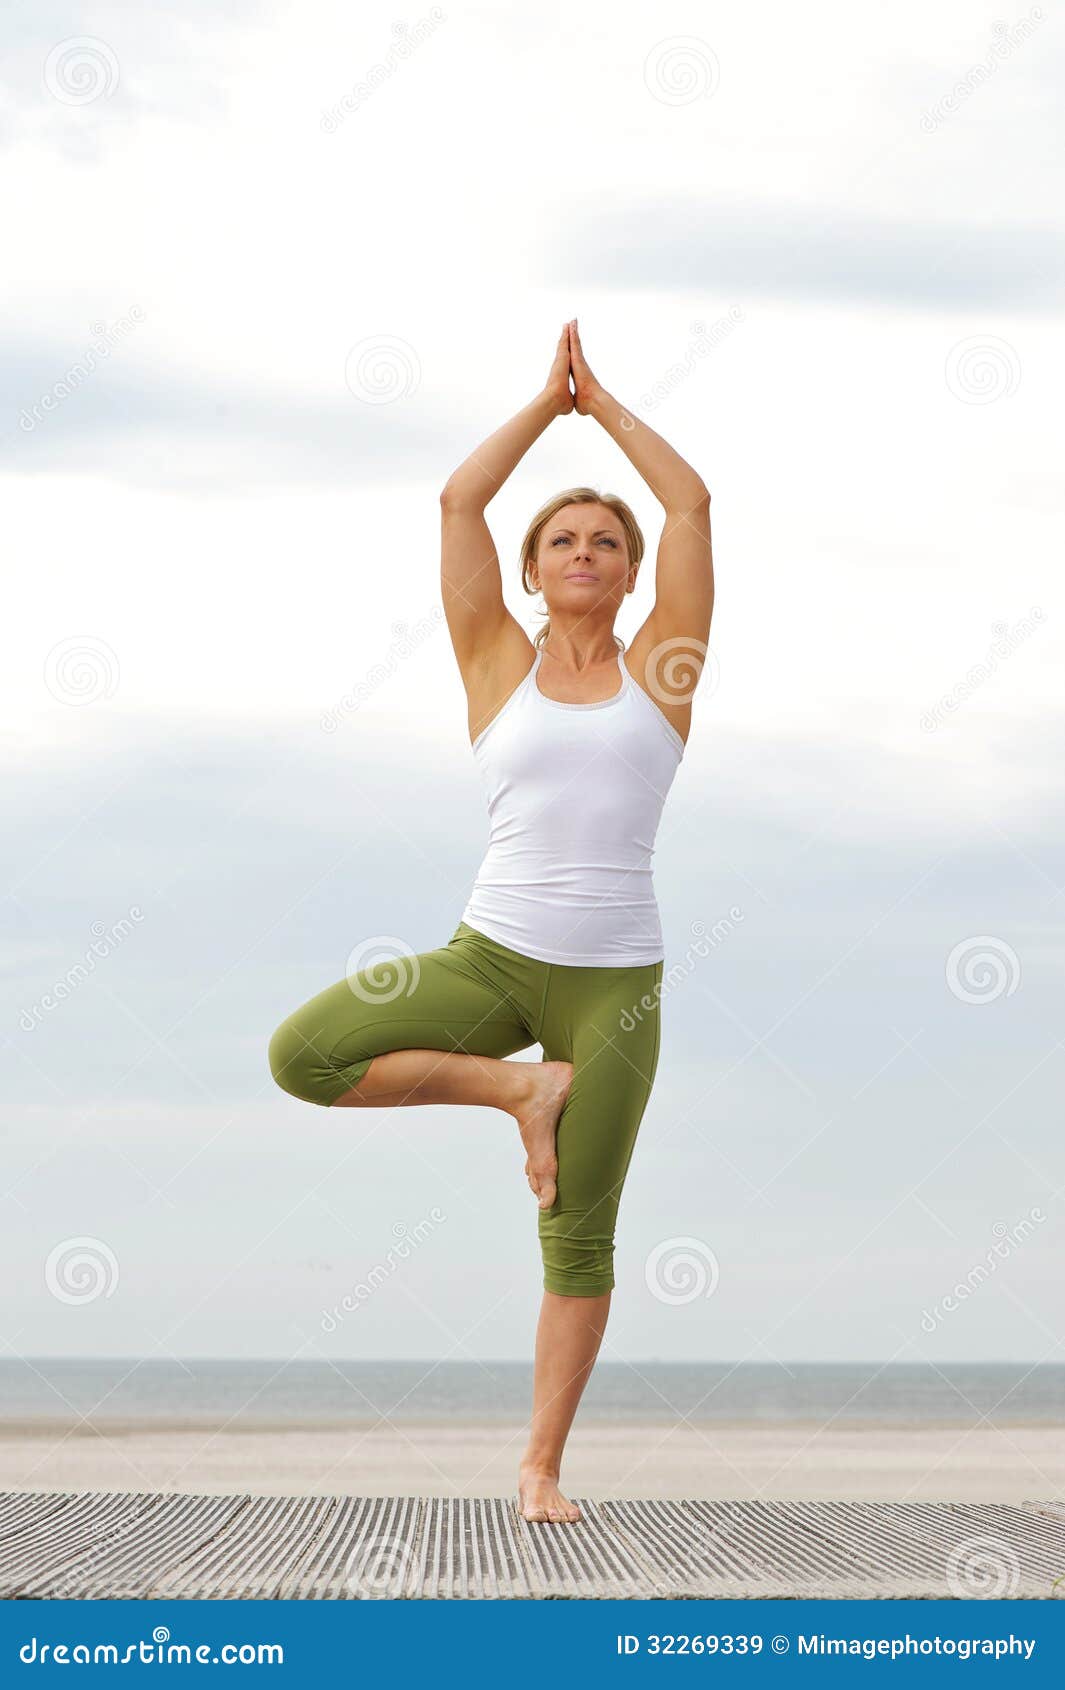 466 Yoga One Leg Balancing Pose Stock Photos - Free & Royalty-Free Stock  Photos from Dreamstime